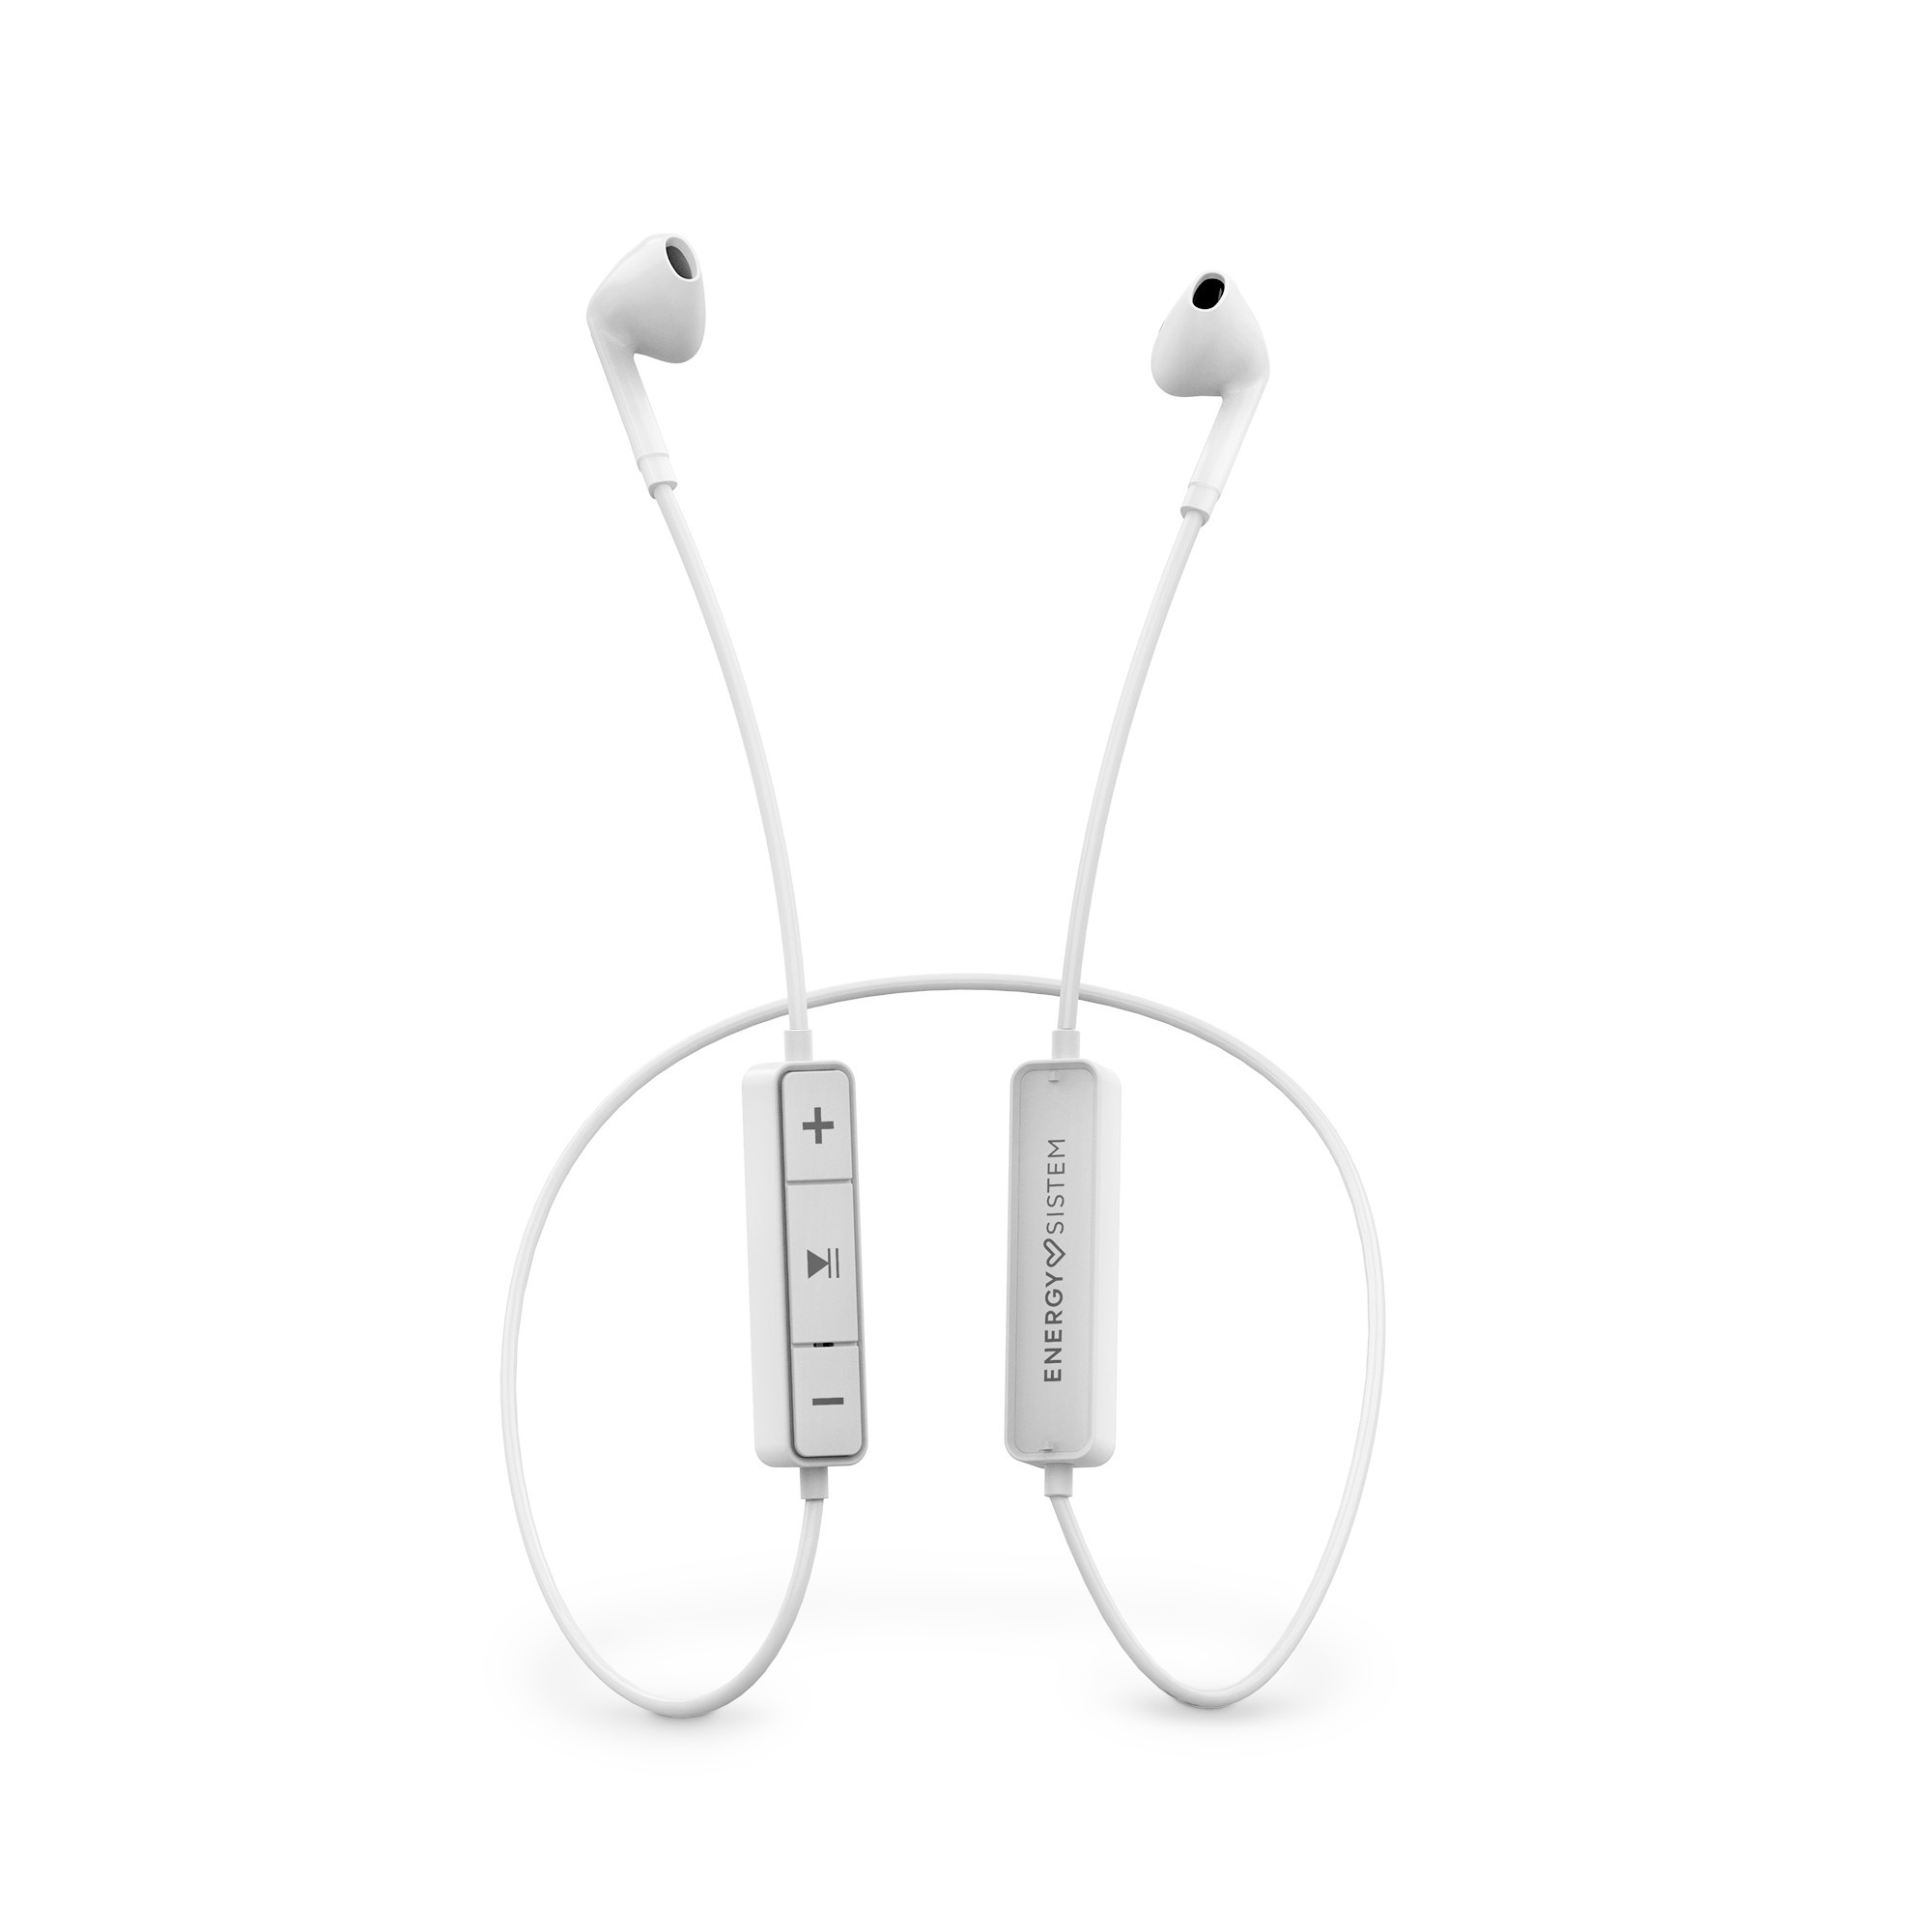 Bluetooth in-ear headphones for better ergonomics